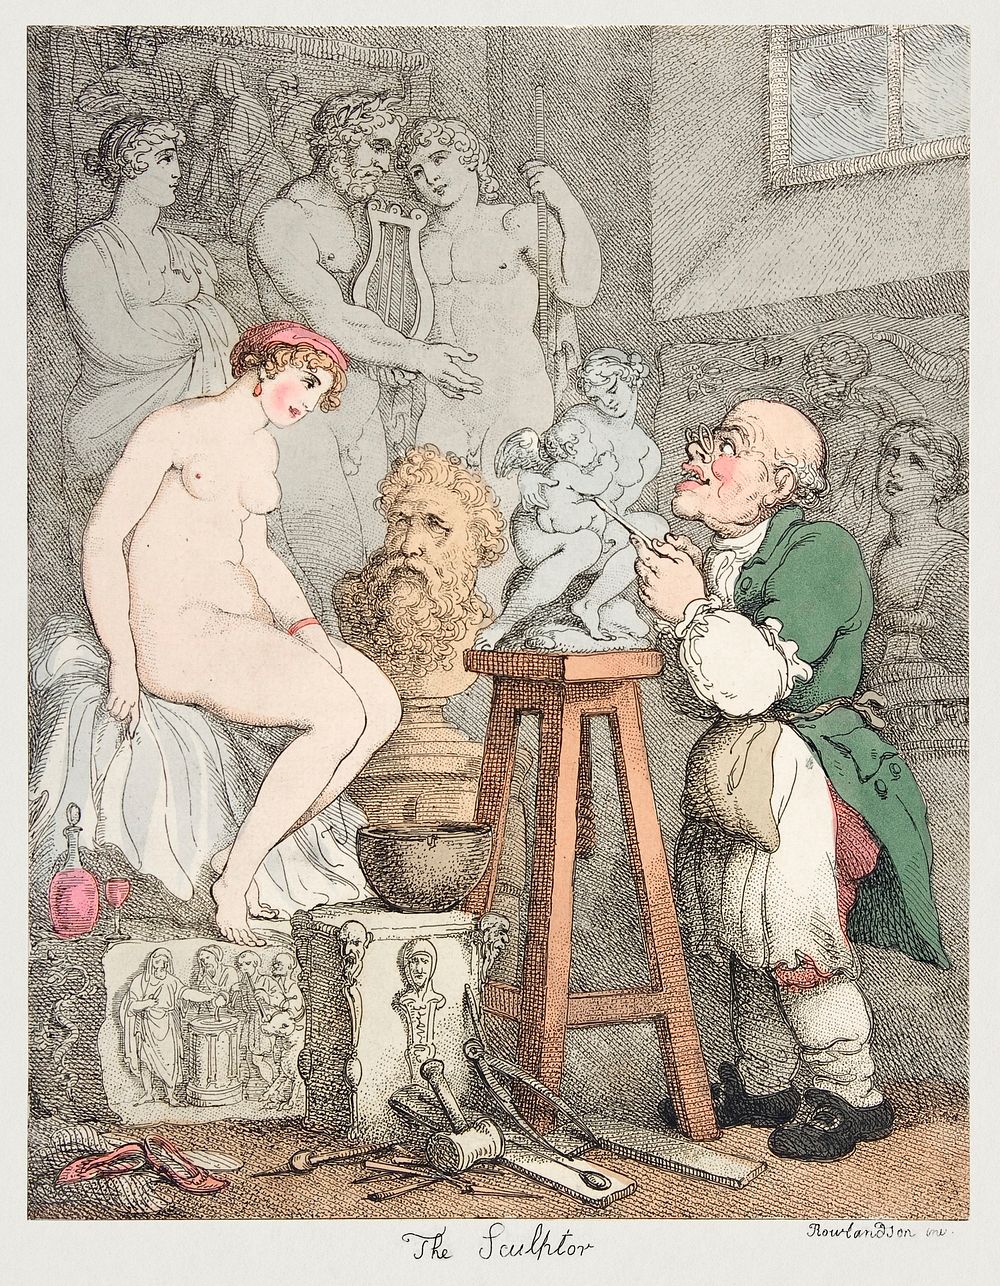 The Sculptor [Preparations for the Academy, Old Joseph Nollekens and his Venus] (ca. 1800) by Thomas Rowlandson. Original…